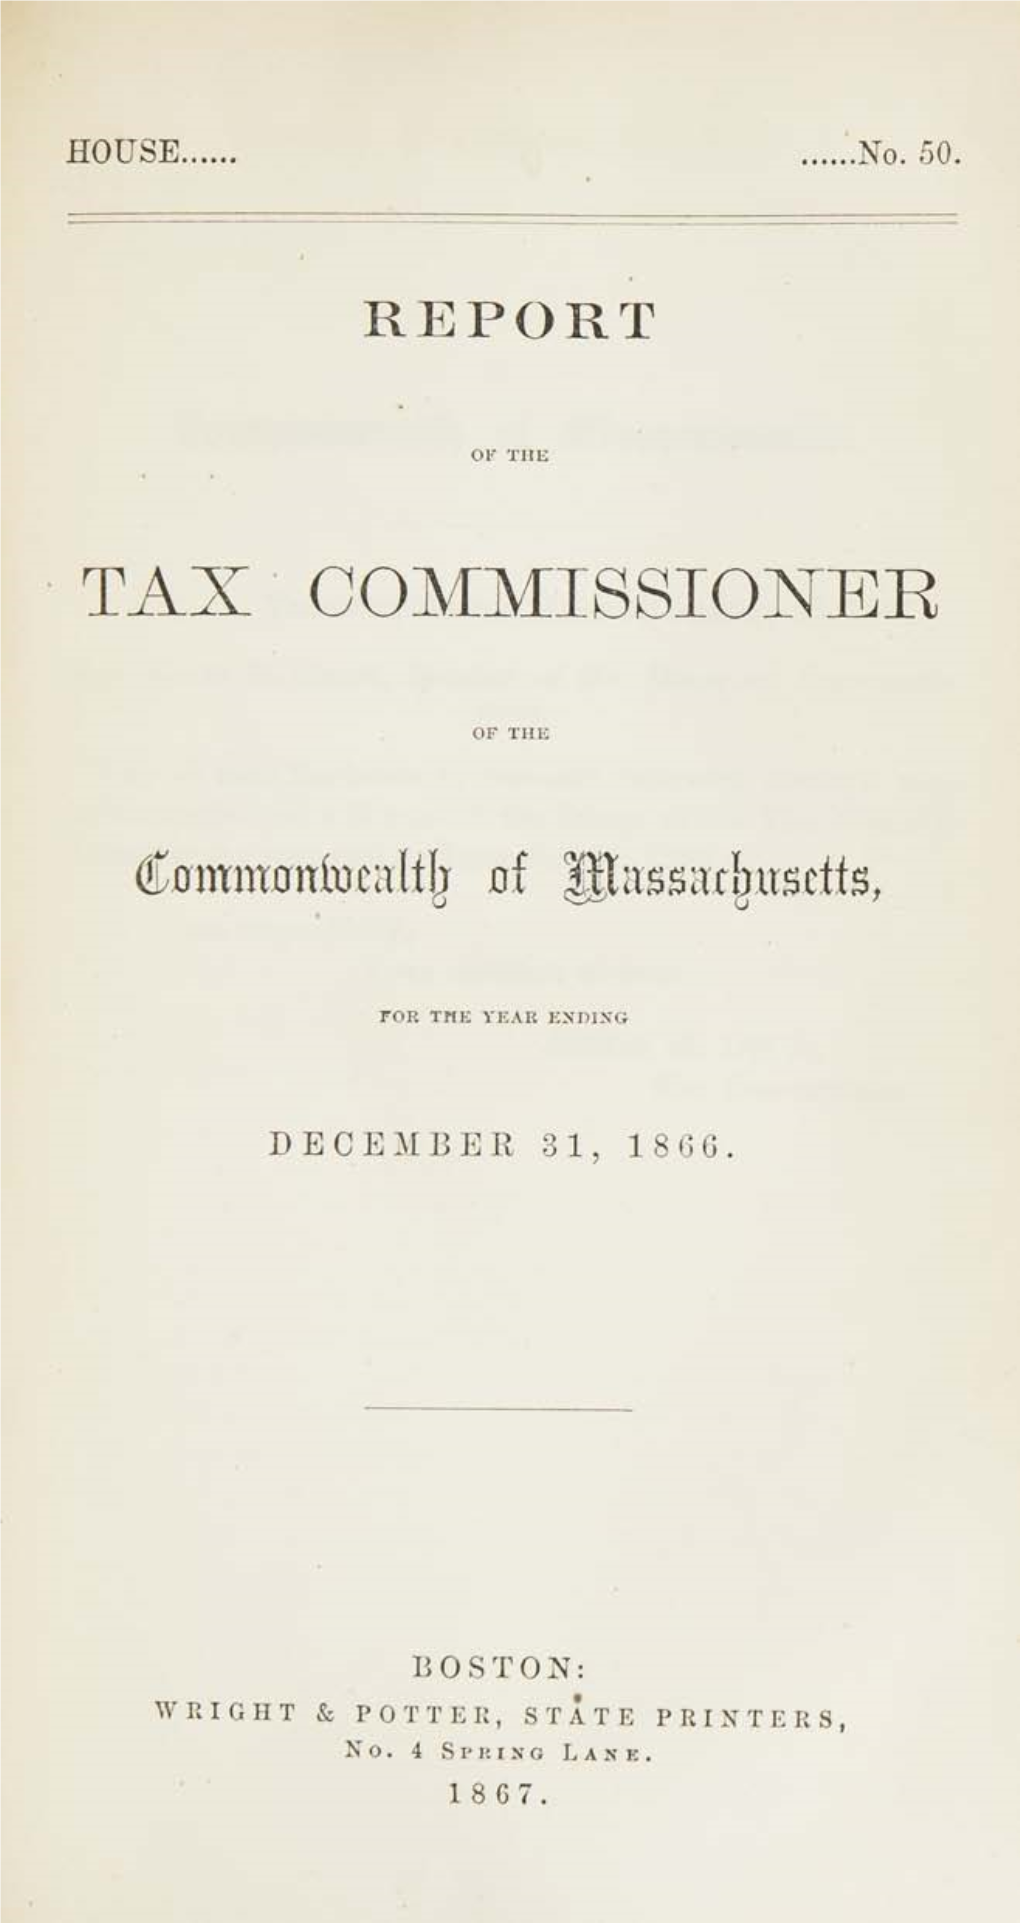 Tax Commissioner